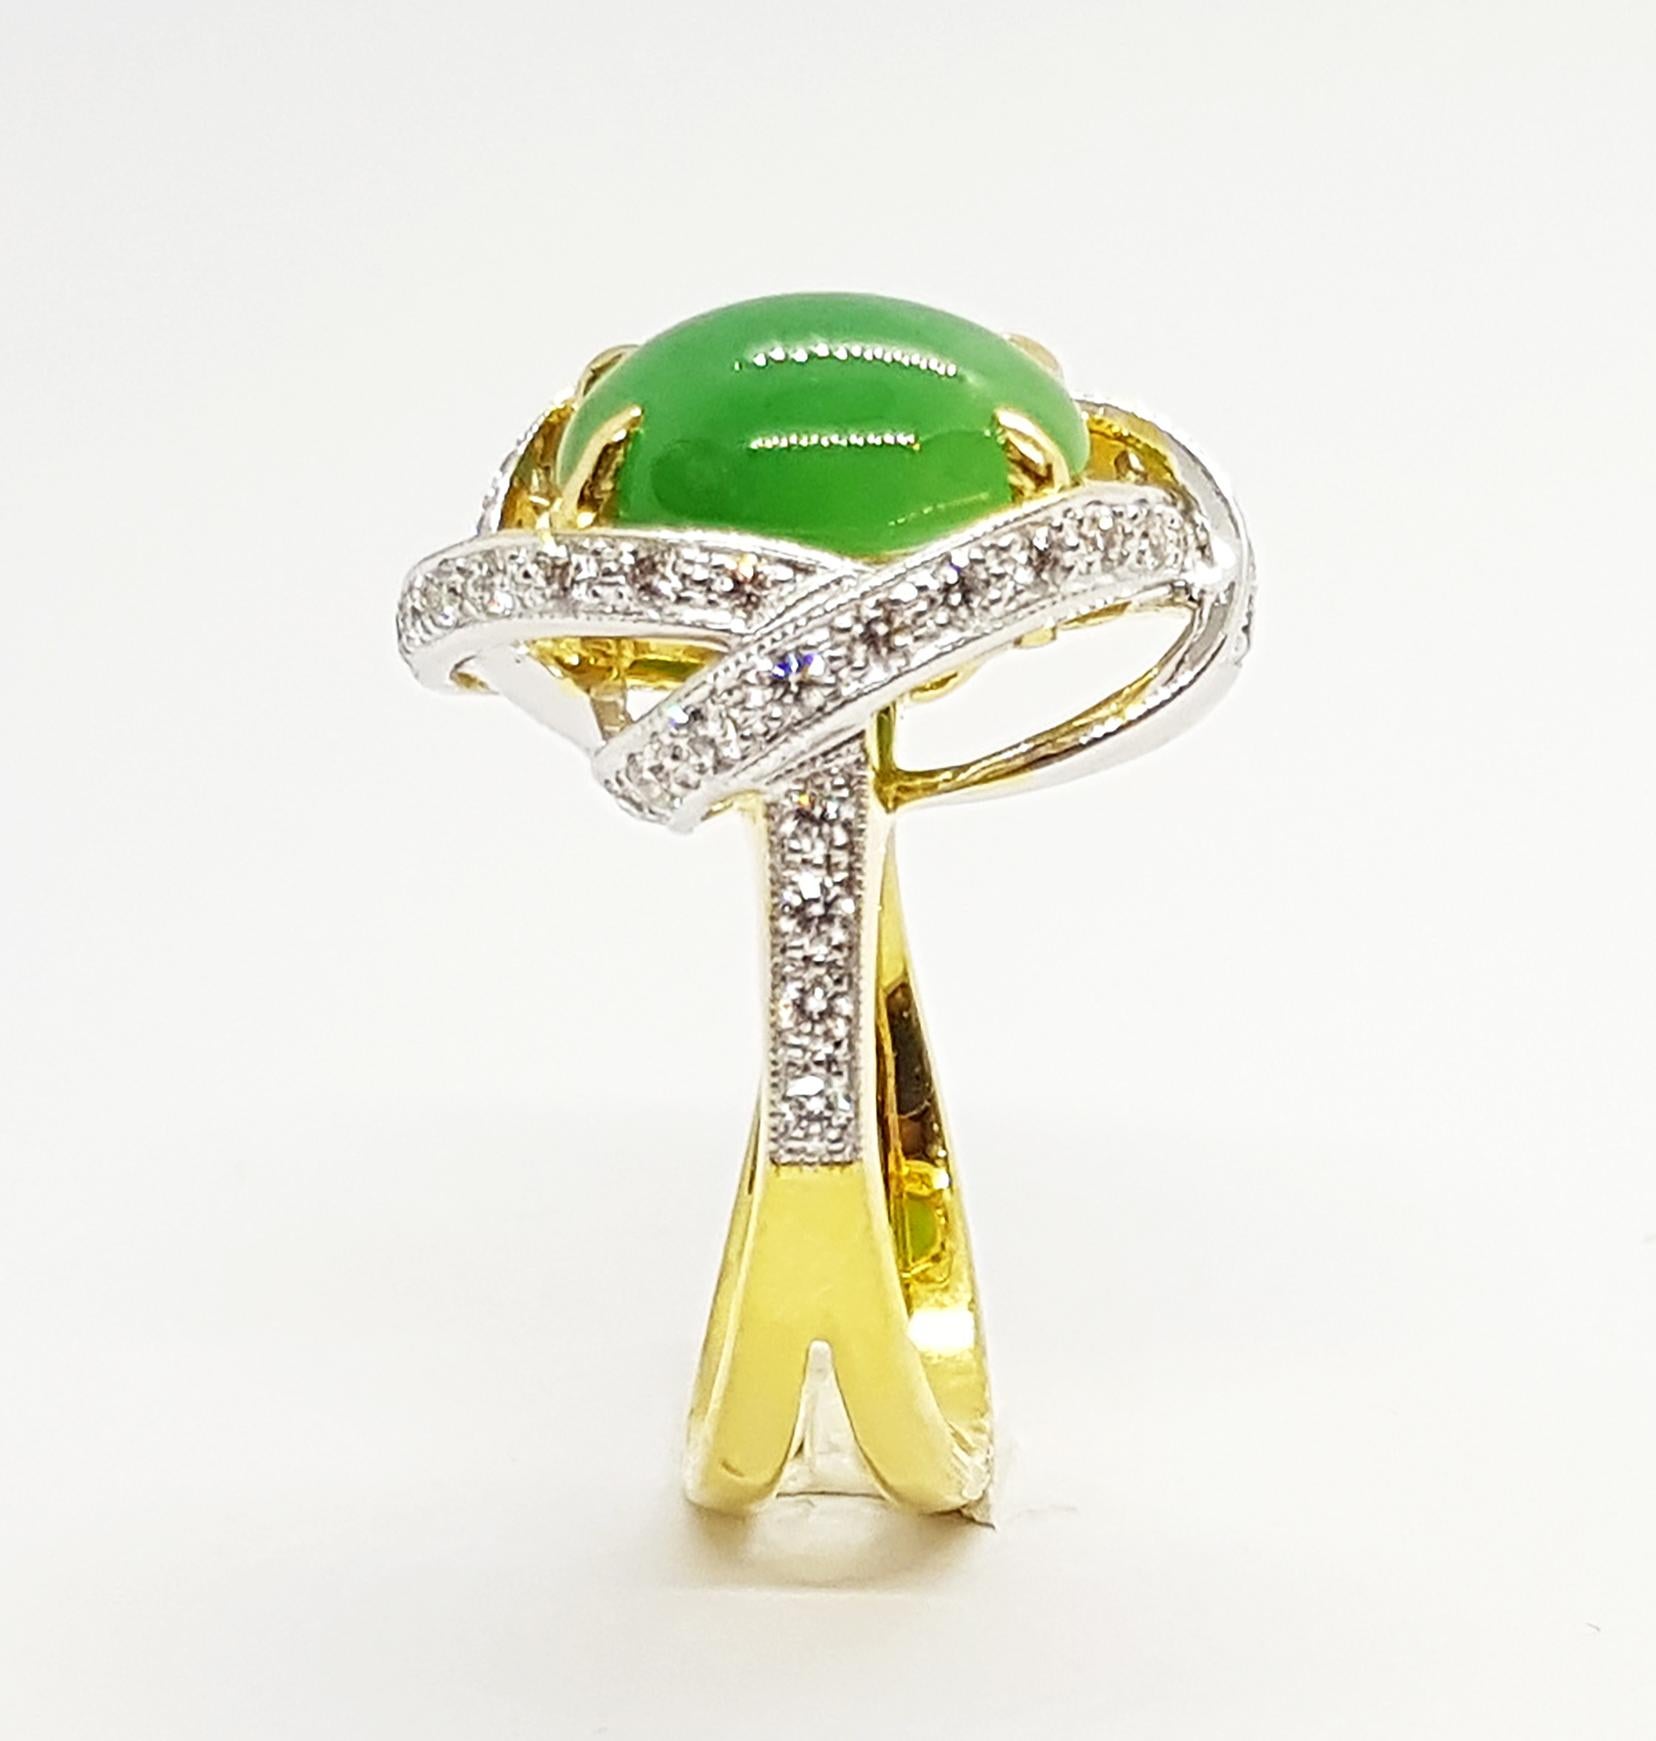 Jade with Diamond 0.48 carat Ring set in 18 Karat Gold Settings

Width:  1.4 cm 
Length: 1.8 cm
Ring Size: 50
Total Weight: 7.82 grams

